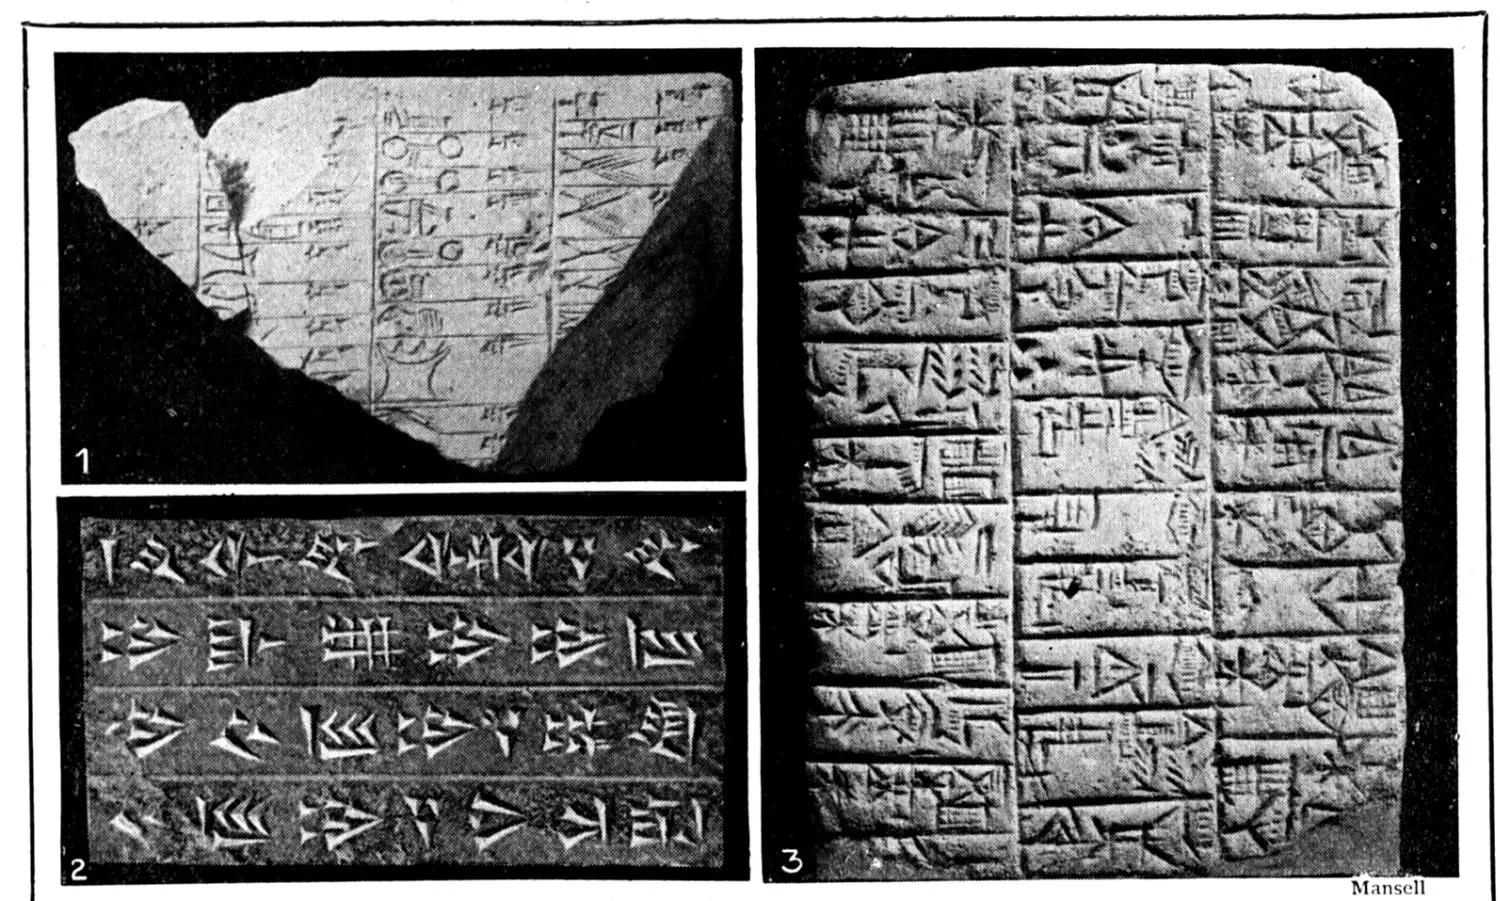 sumerian-writing-and-cuneiform